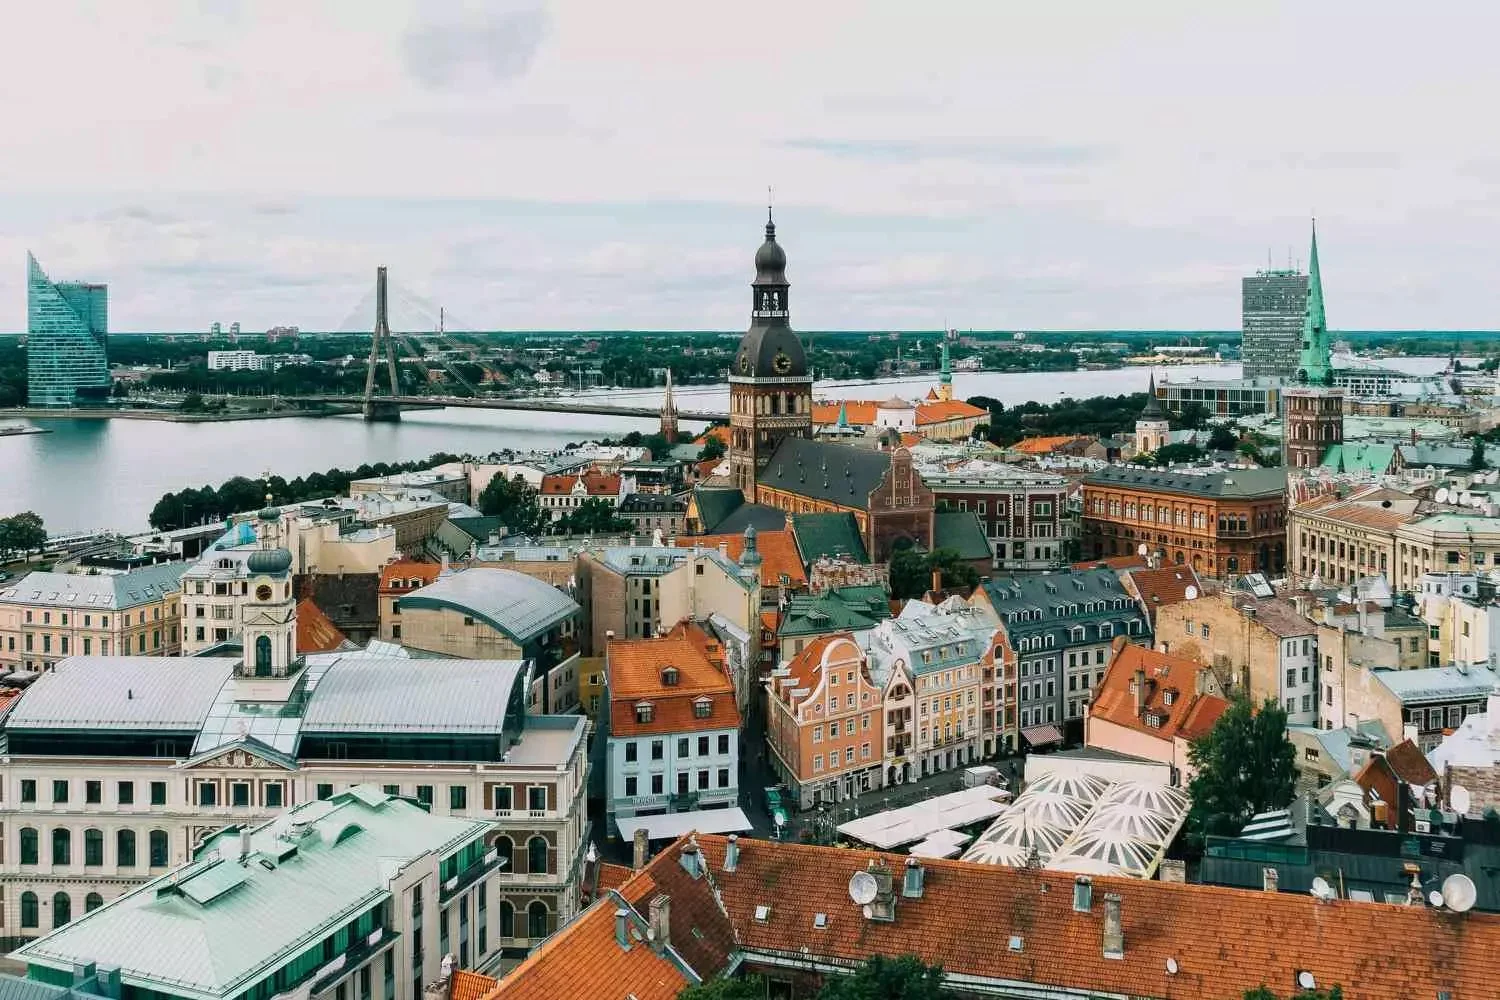 Latvia 2030 - Sustainable Development Strategy of Latvia